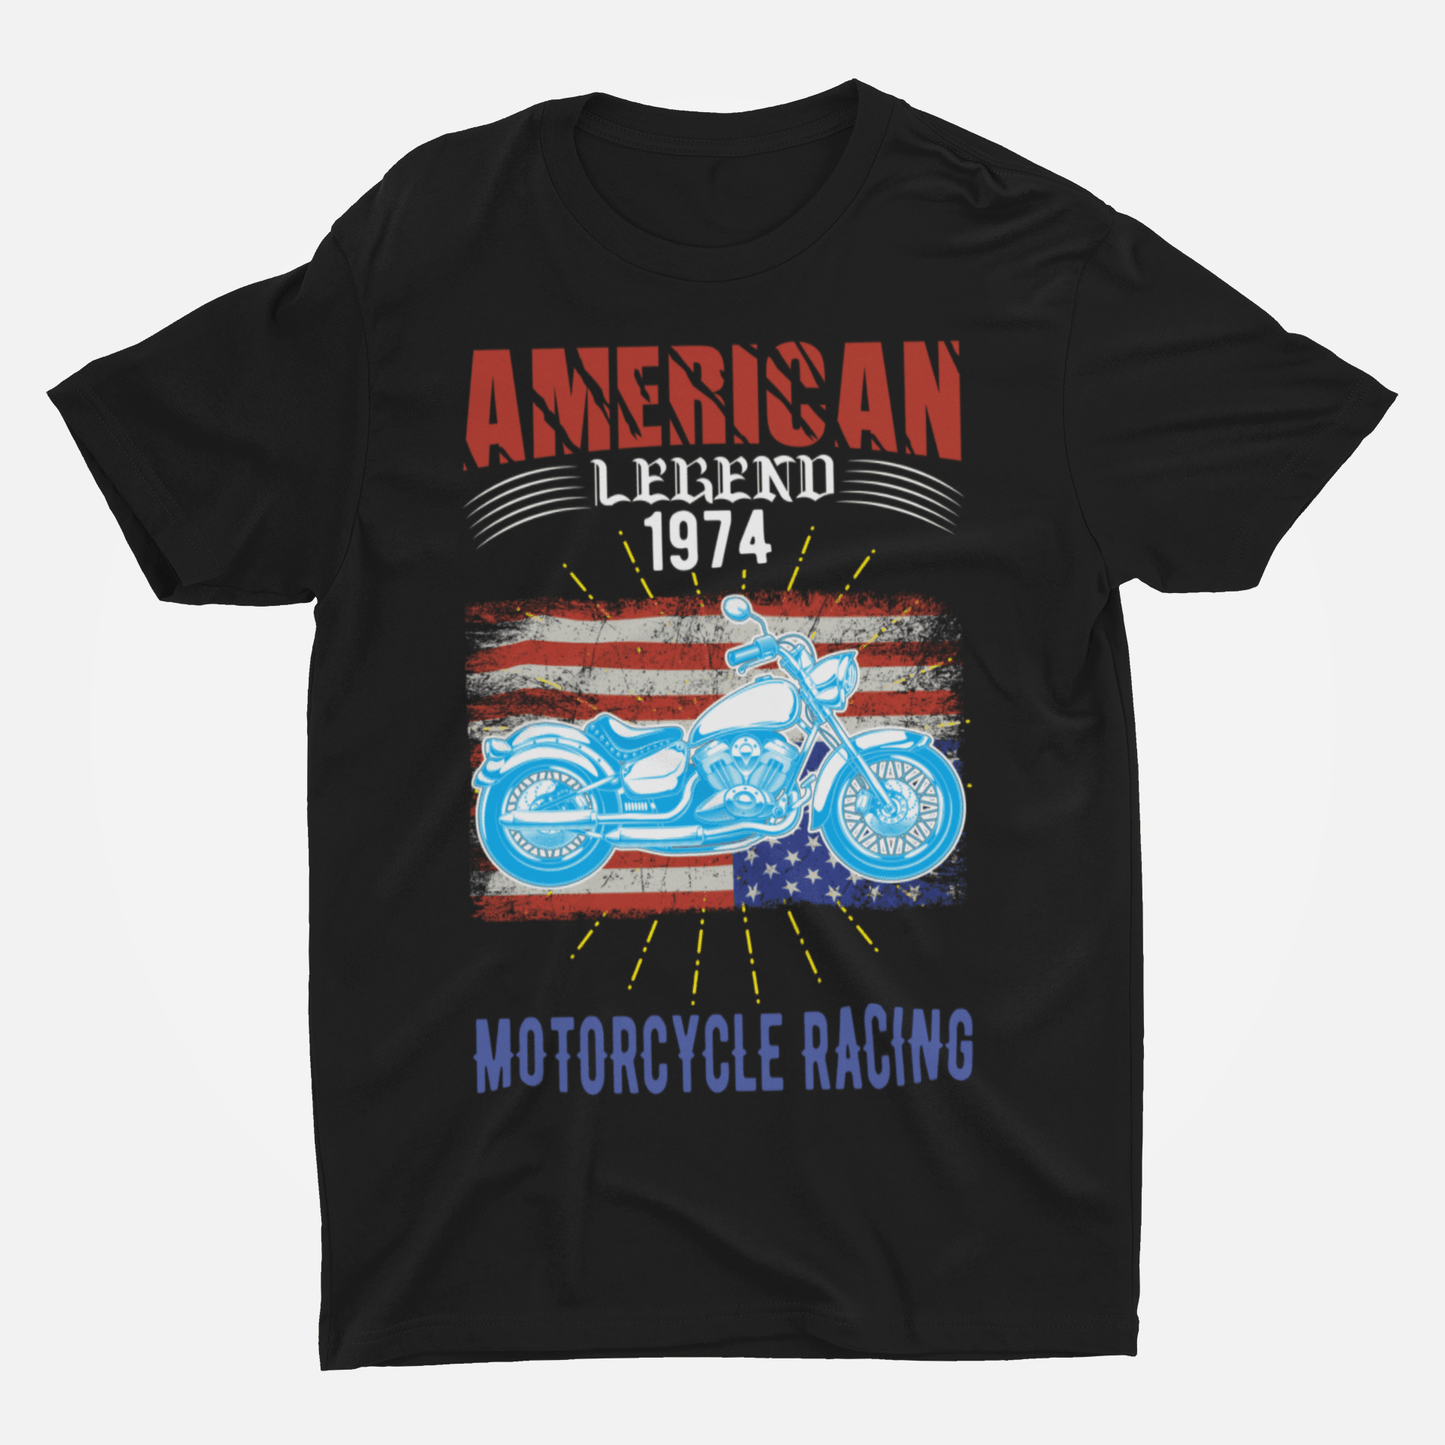 American Legend Black T-Shirt For Men - ATOM